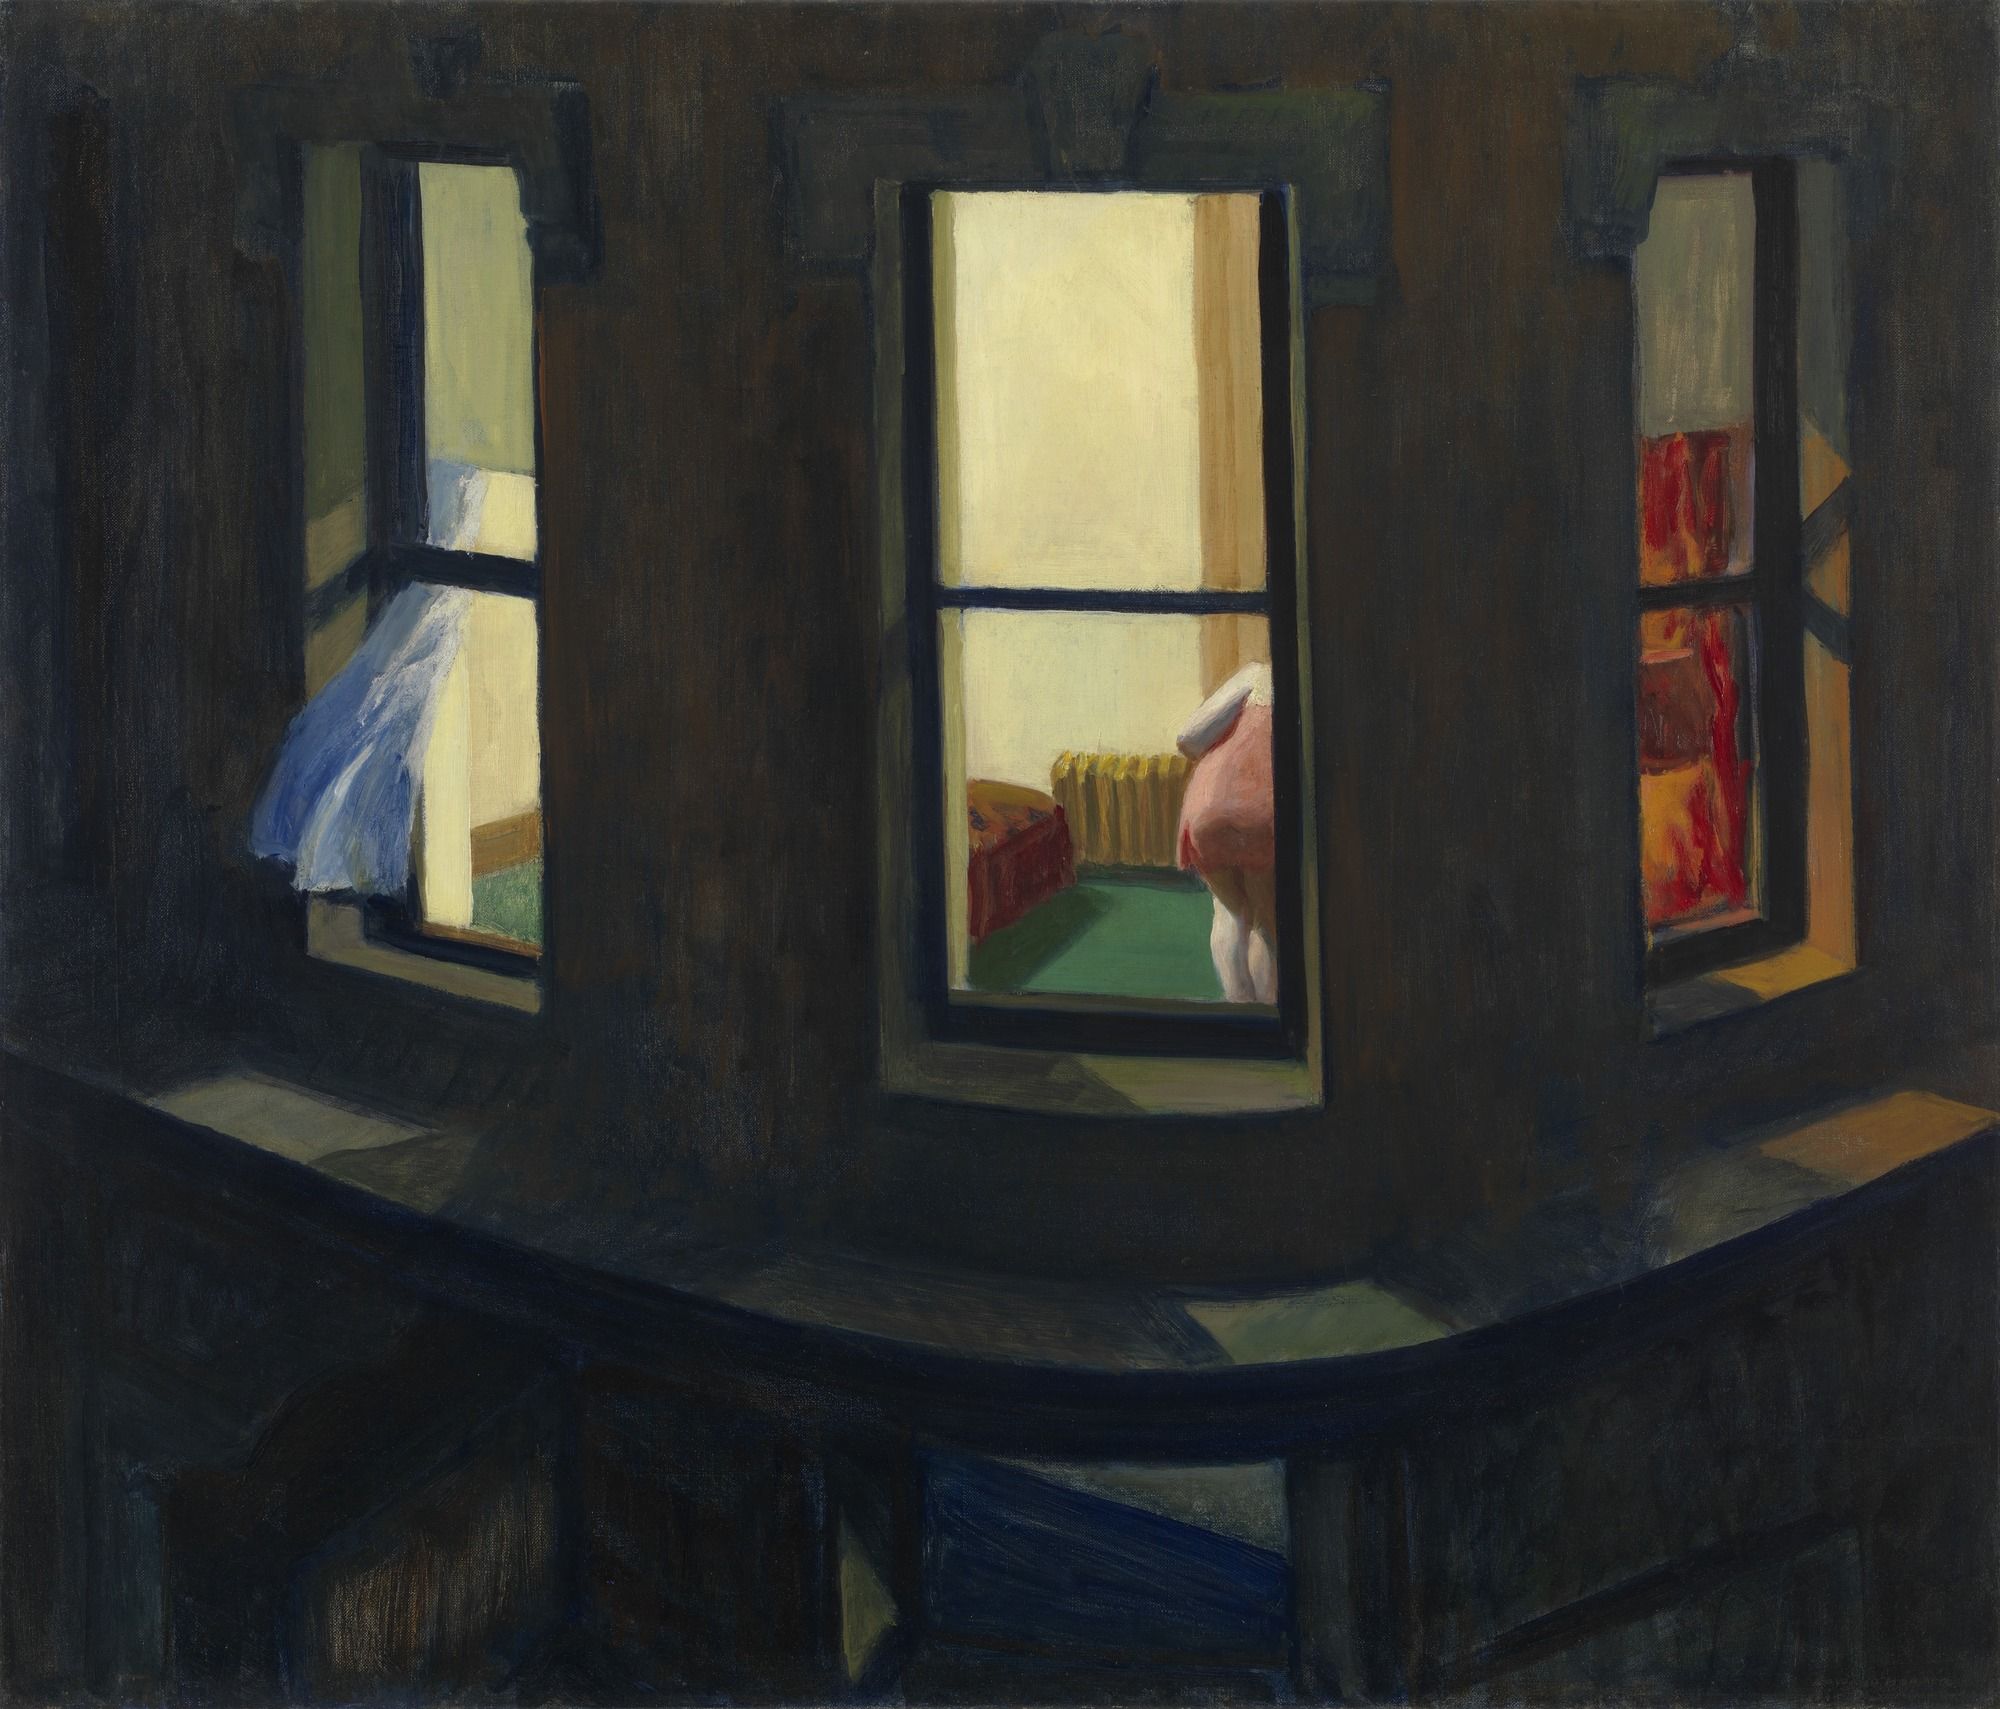 Ночные окна by Edward Hopper - 1928 - 74 x 86 см 